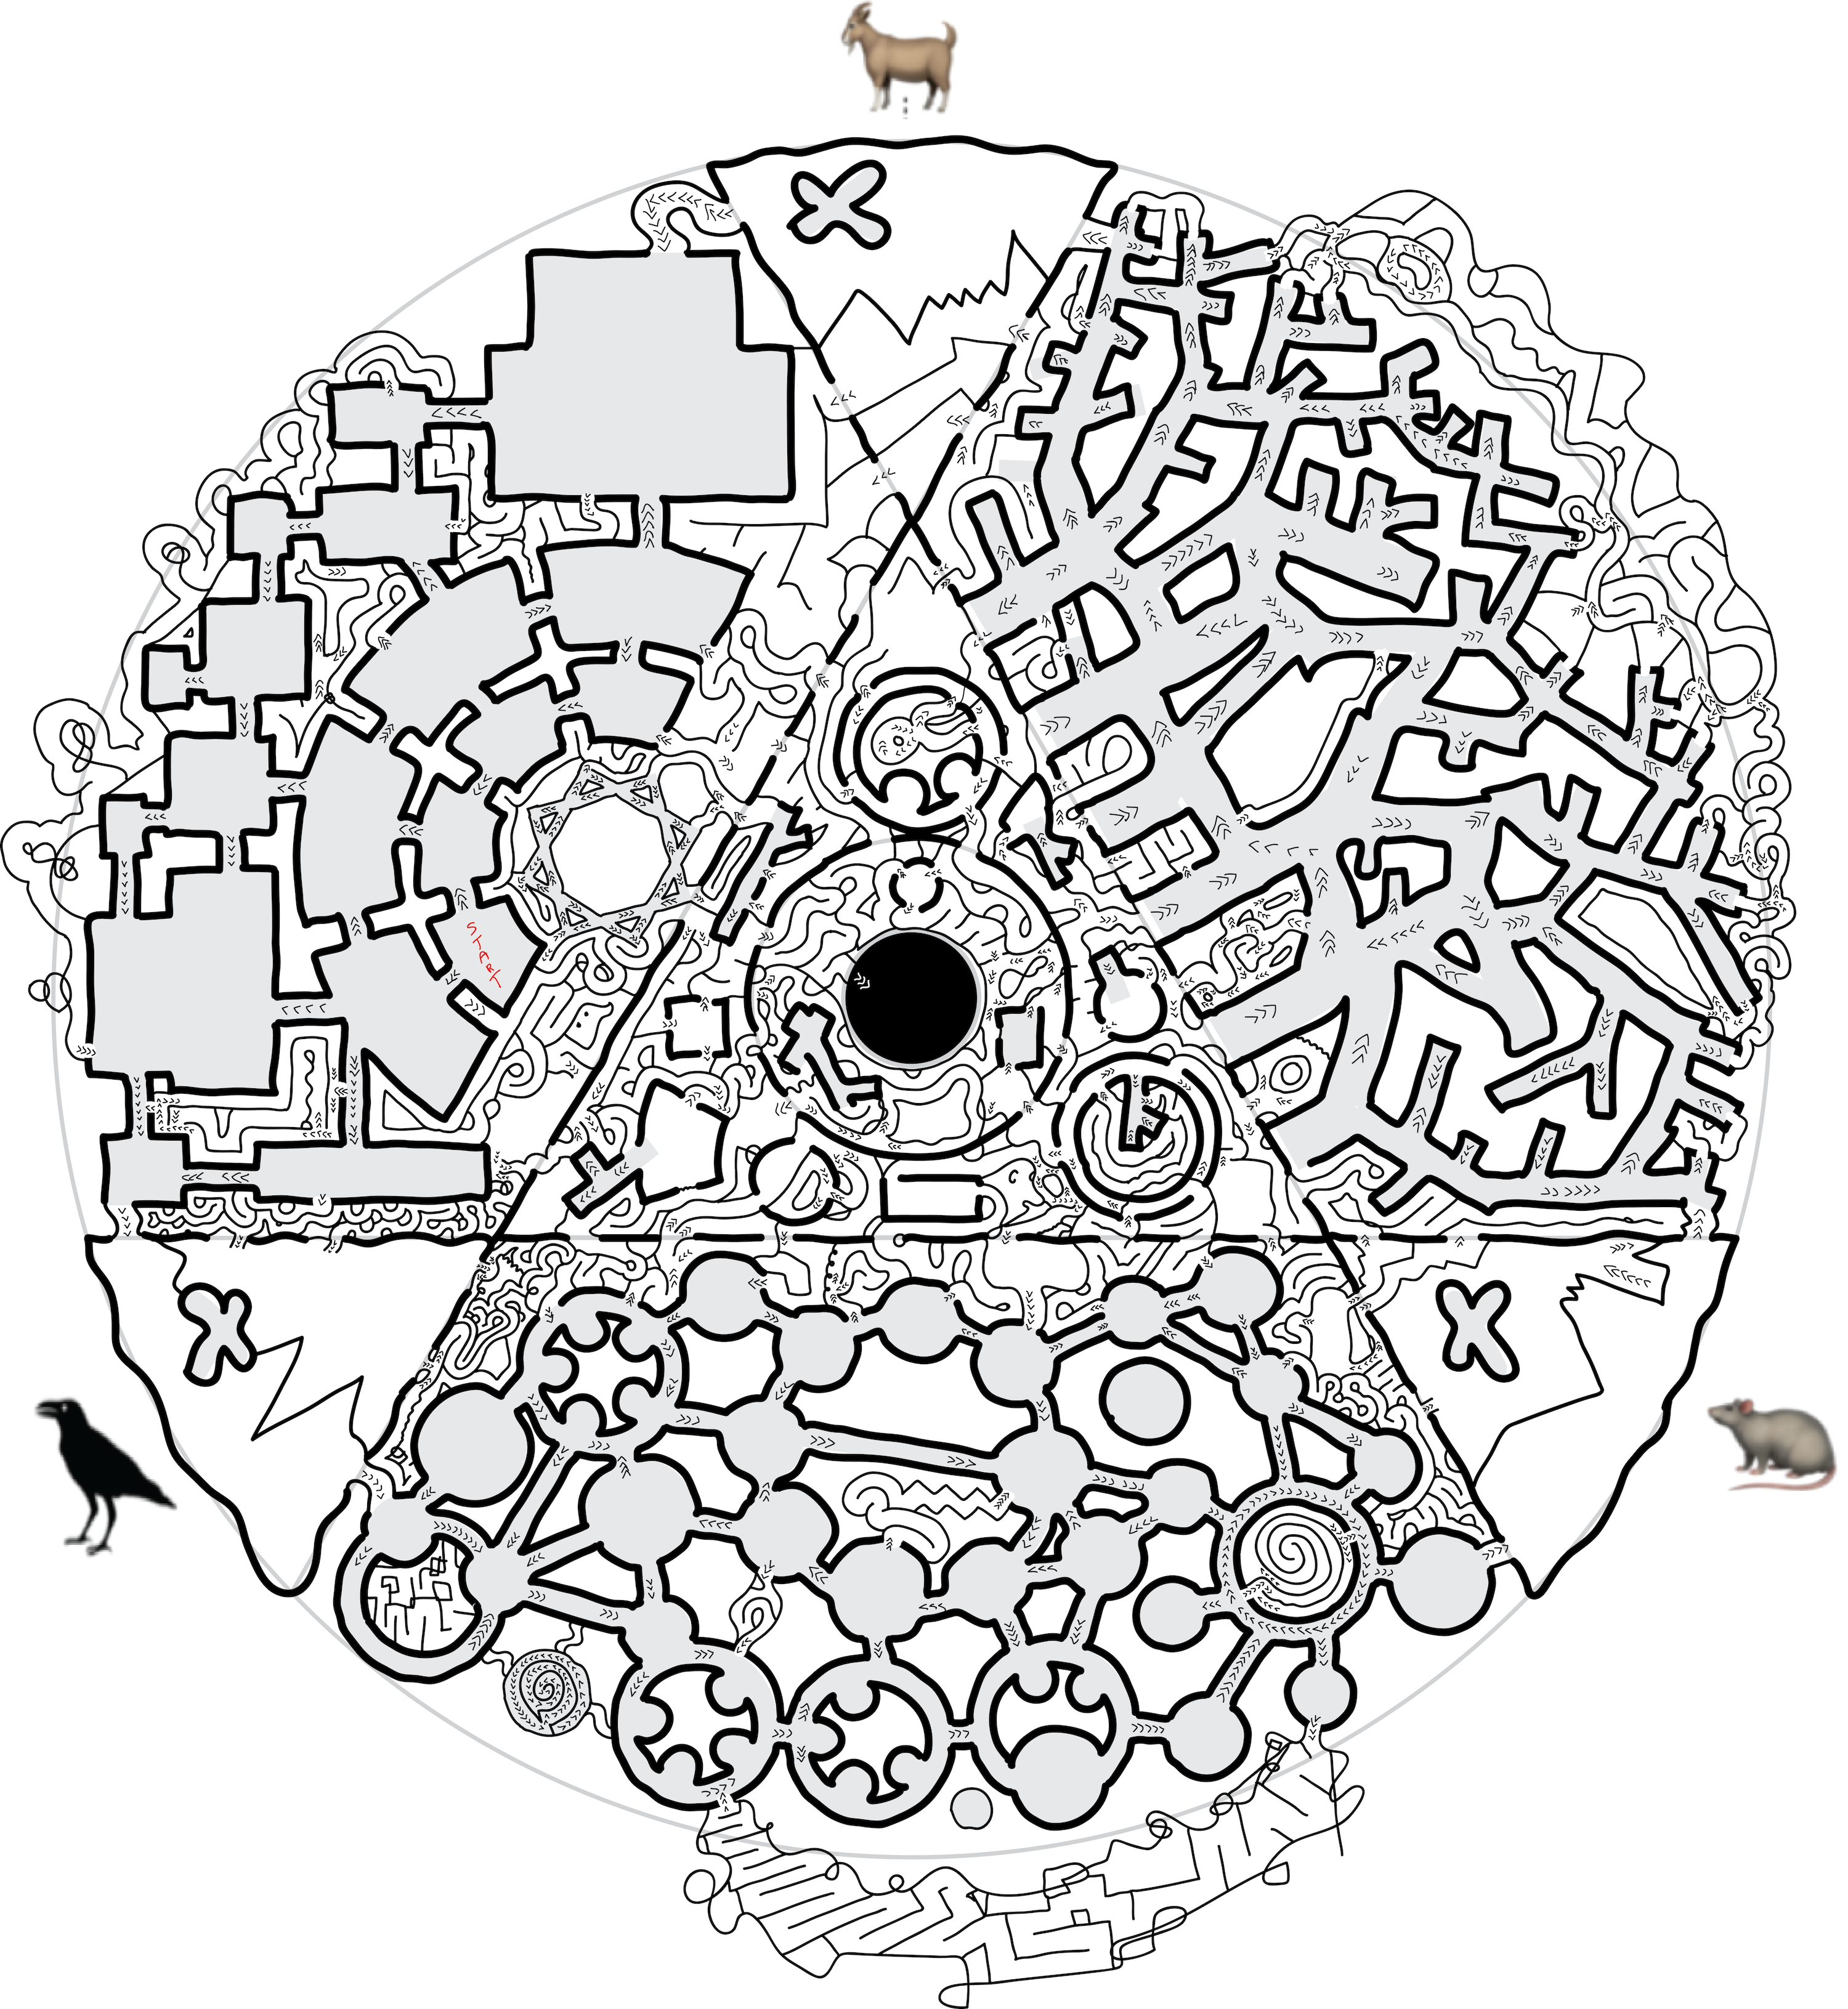 Clockless Clock, by Venkatesh Rao and Daniel Schmidt, 3000 × 3262 PNG, ~4.3MB